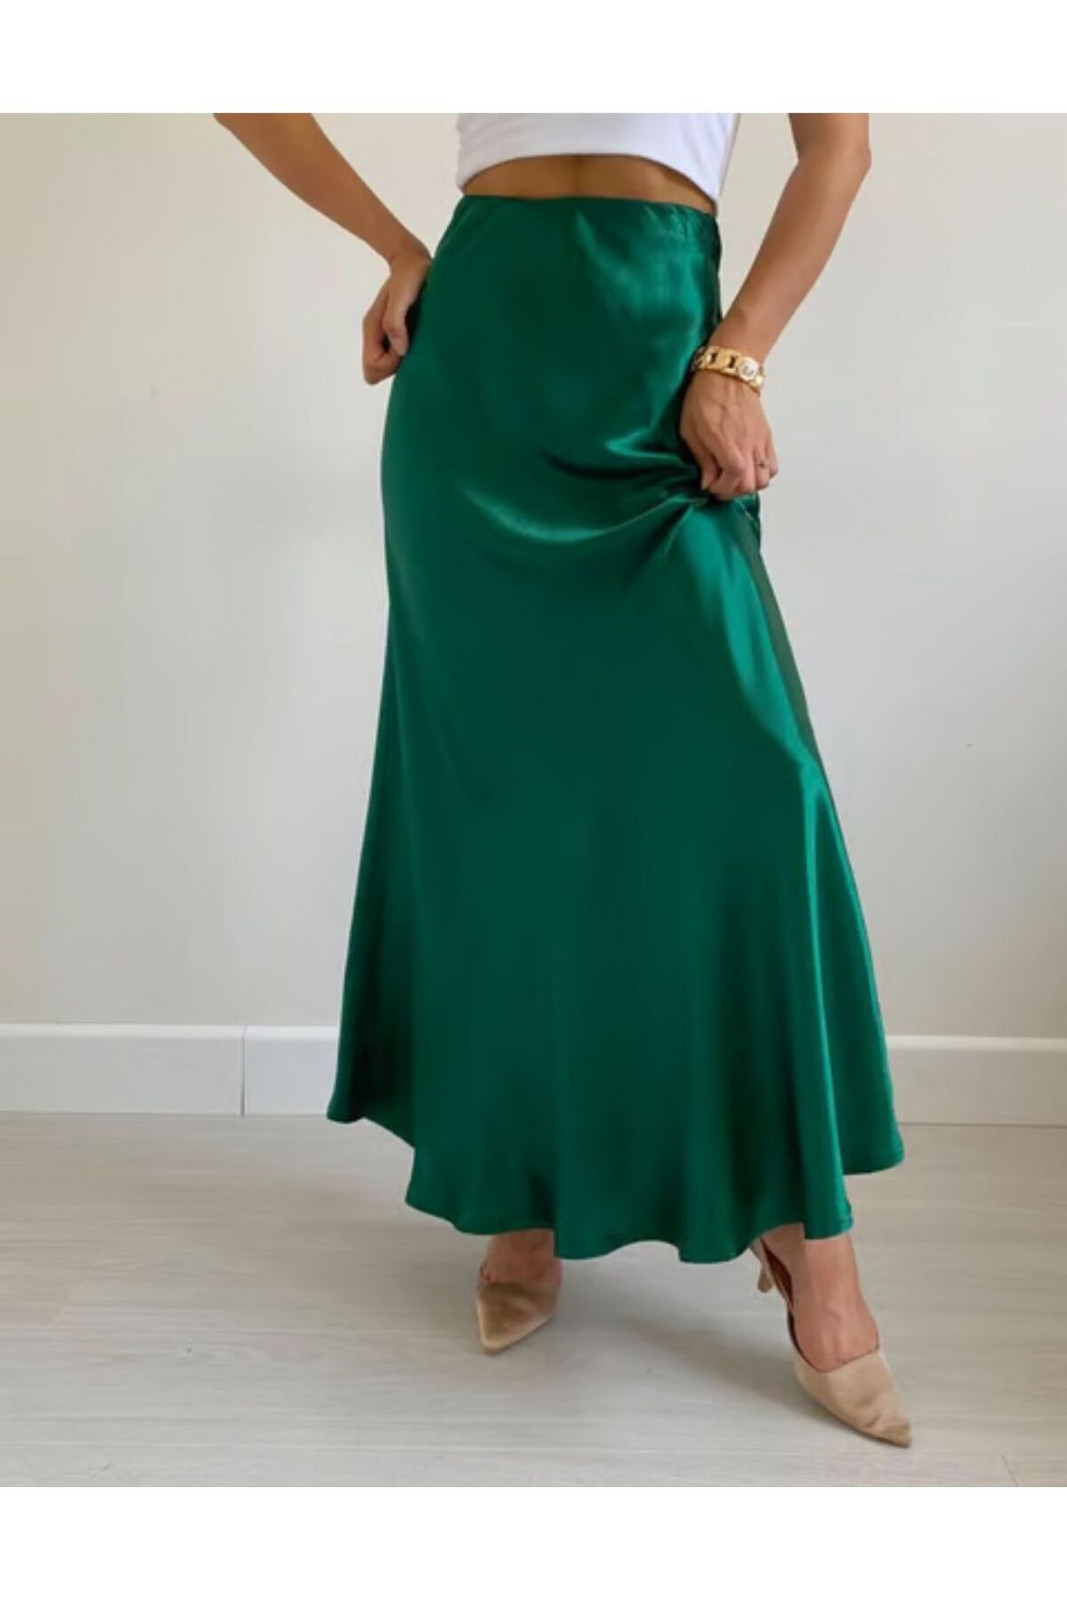 Laluvia Emerald Satin Skirt with Hidden Side Zipper and Elastic Waist